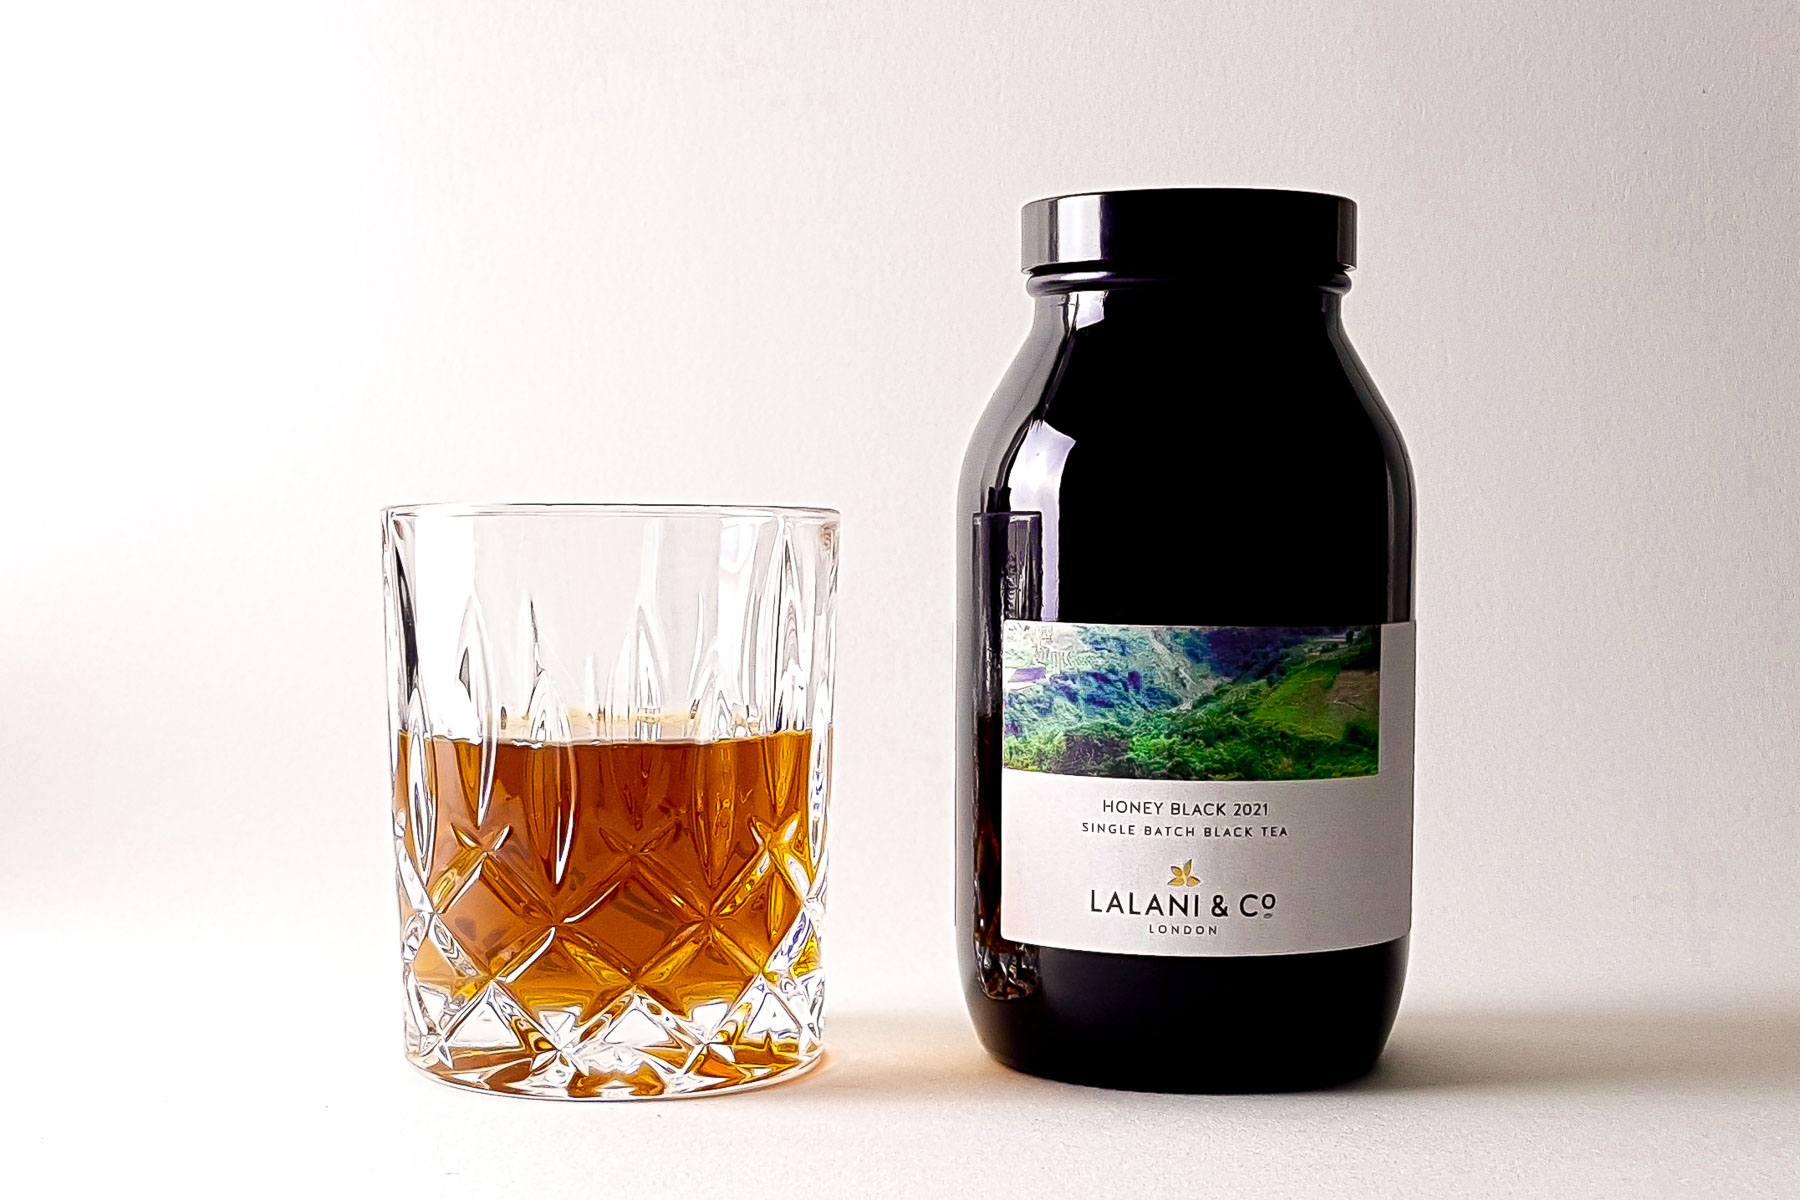 Lalani & Co: Honey Black Taiwanese Black Tea